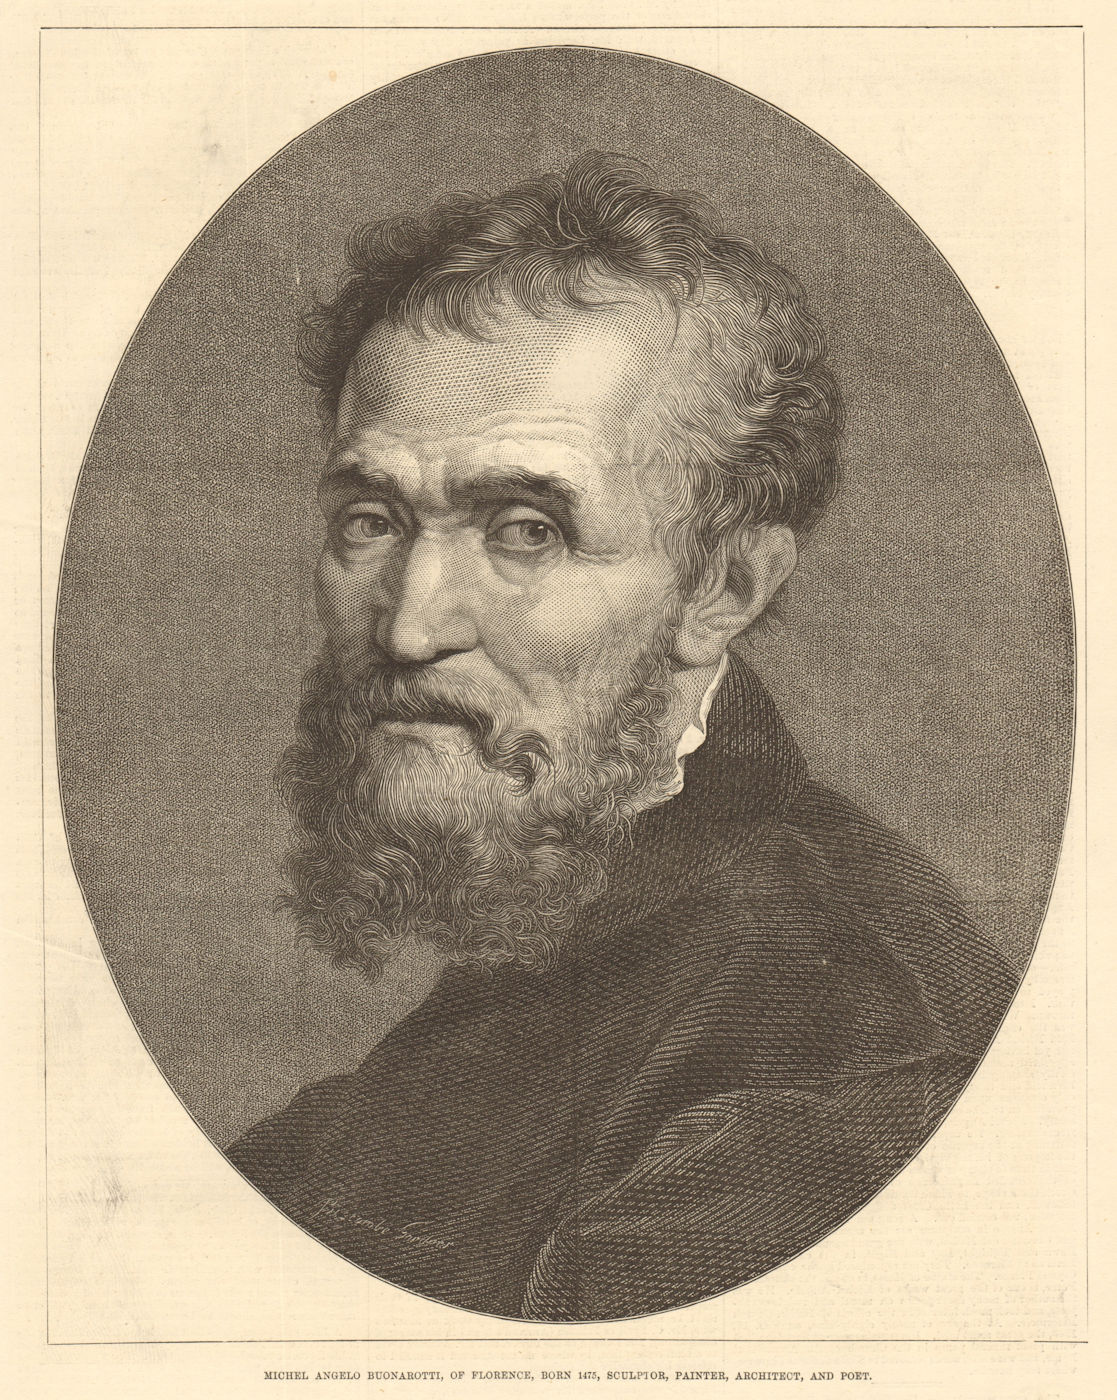 Michelangelo Buonarotti, Florence, sculptor painter architec poet. Italy 1875